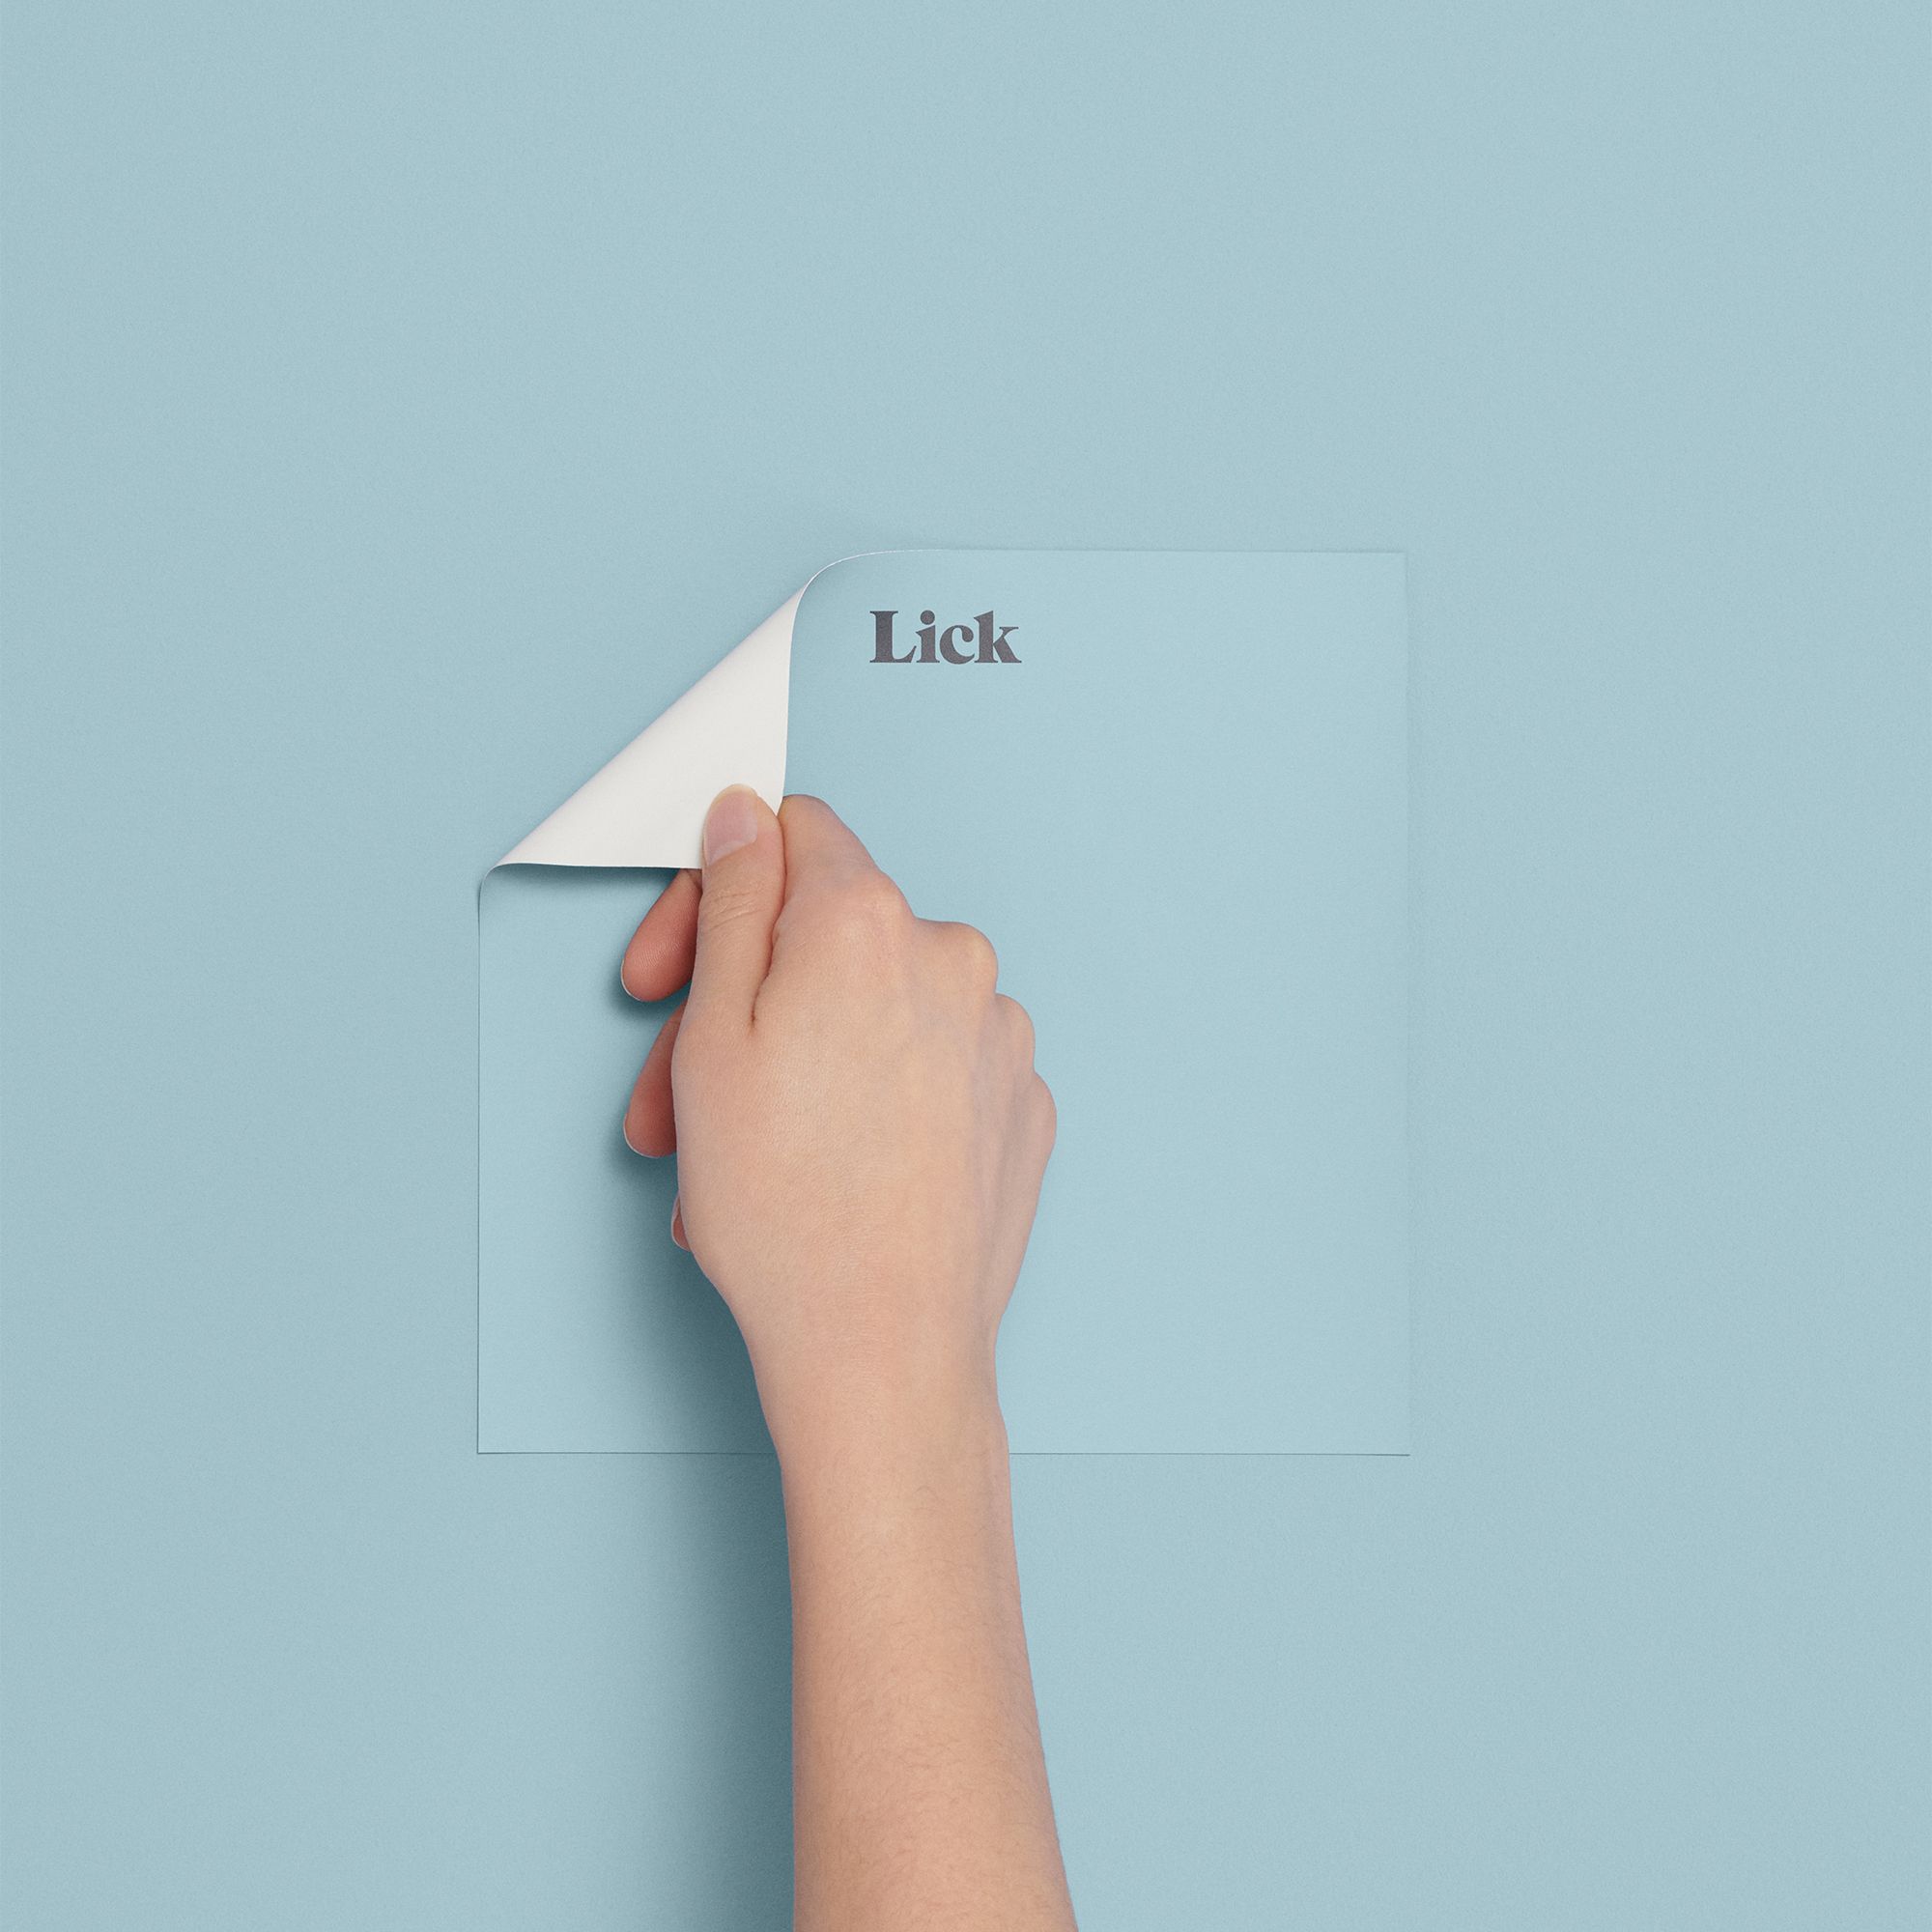 Lick Blue 08 Peel & stick Tester